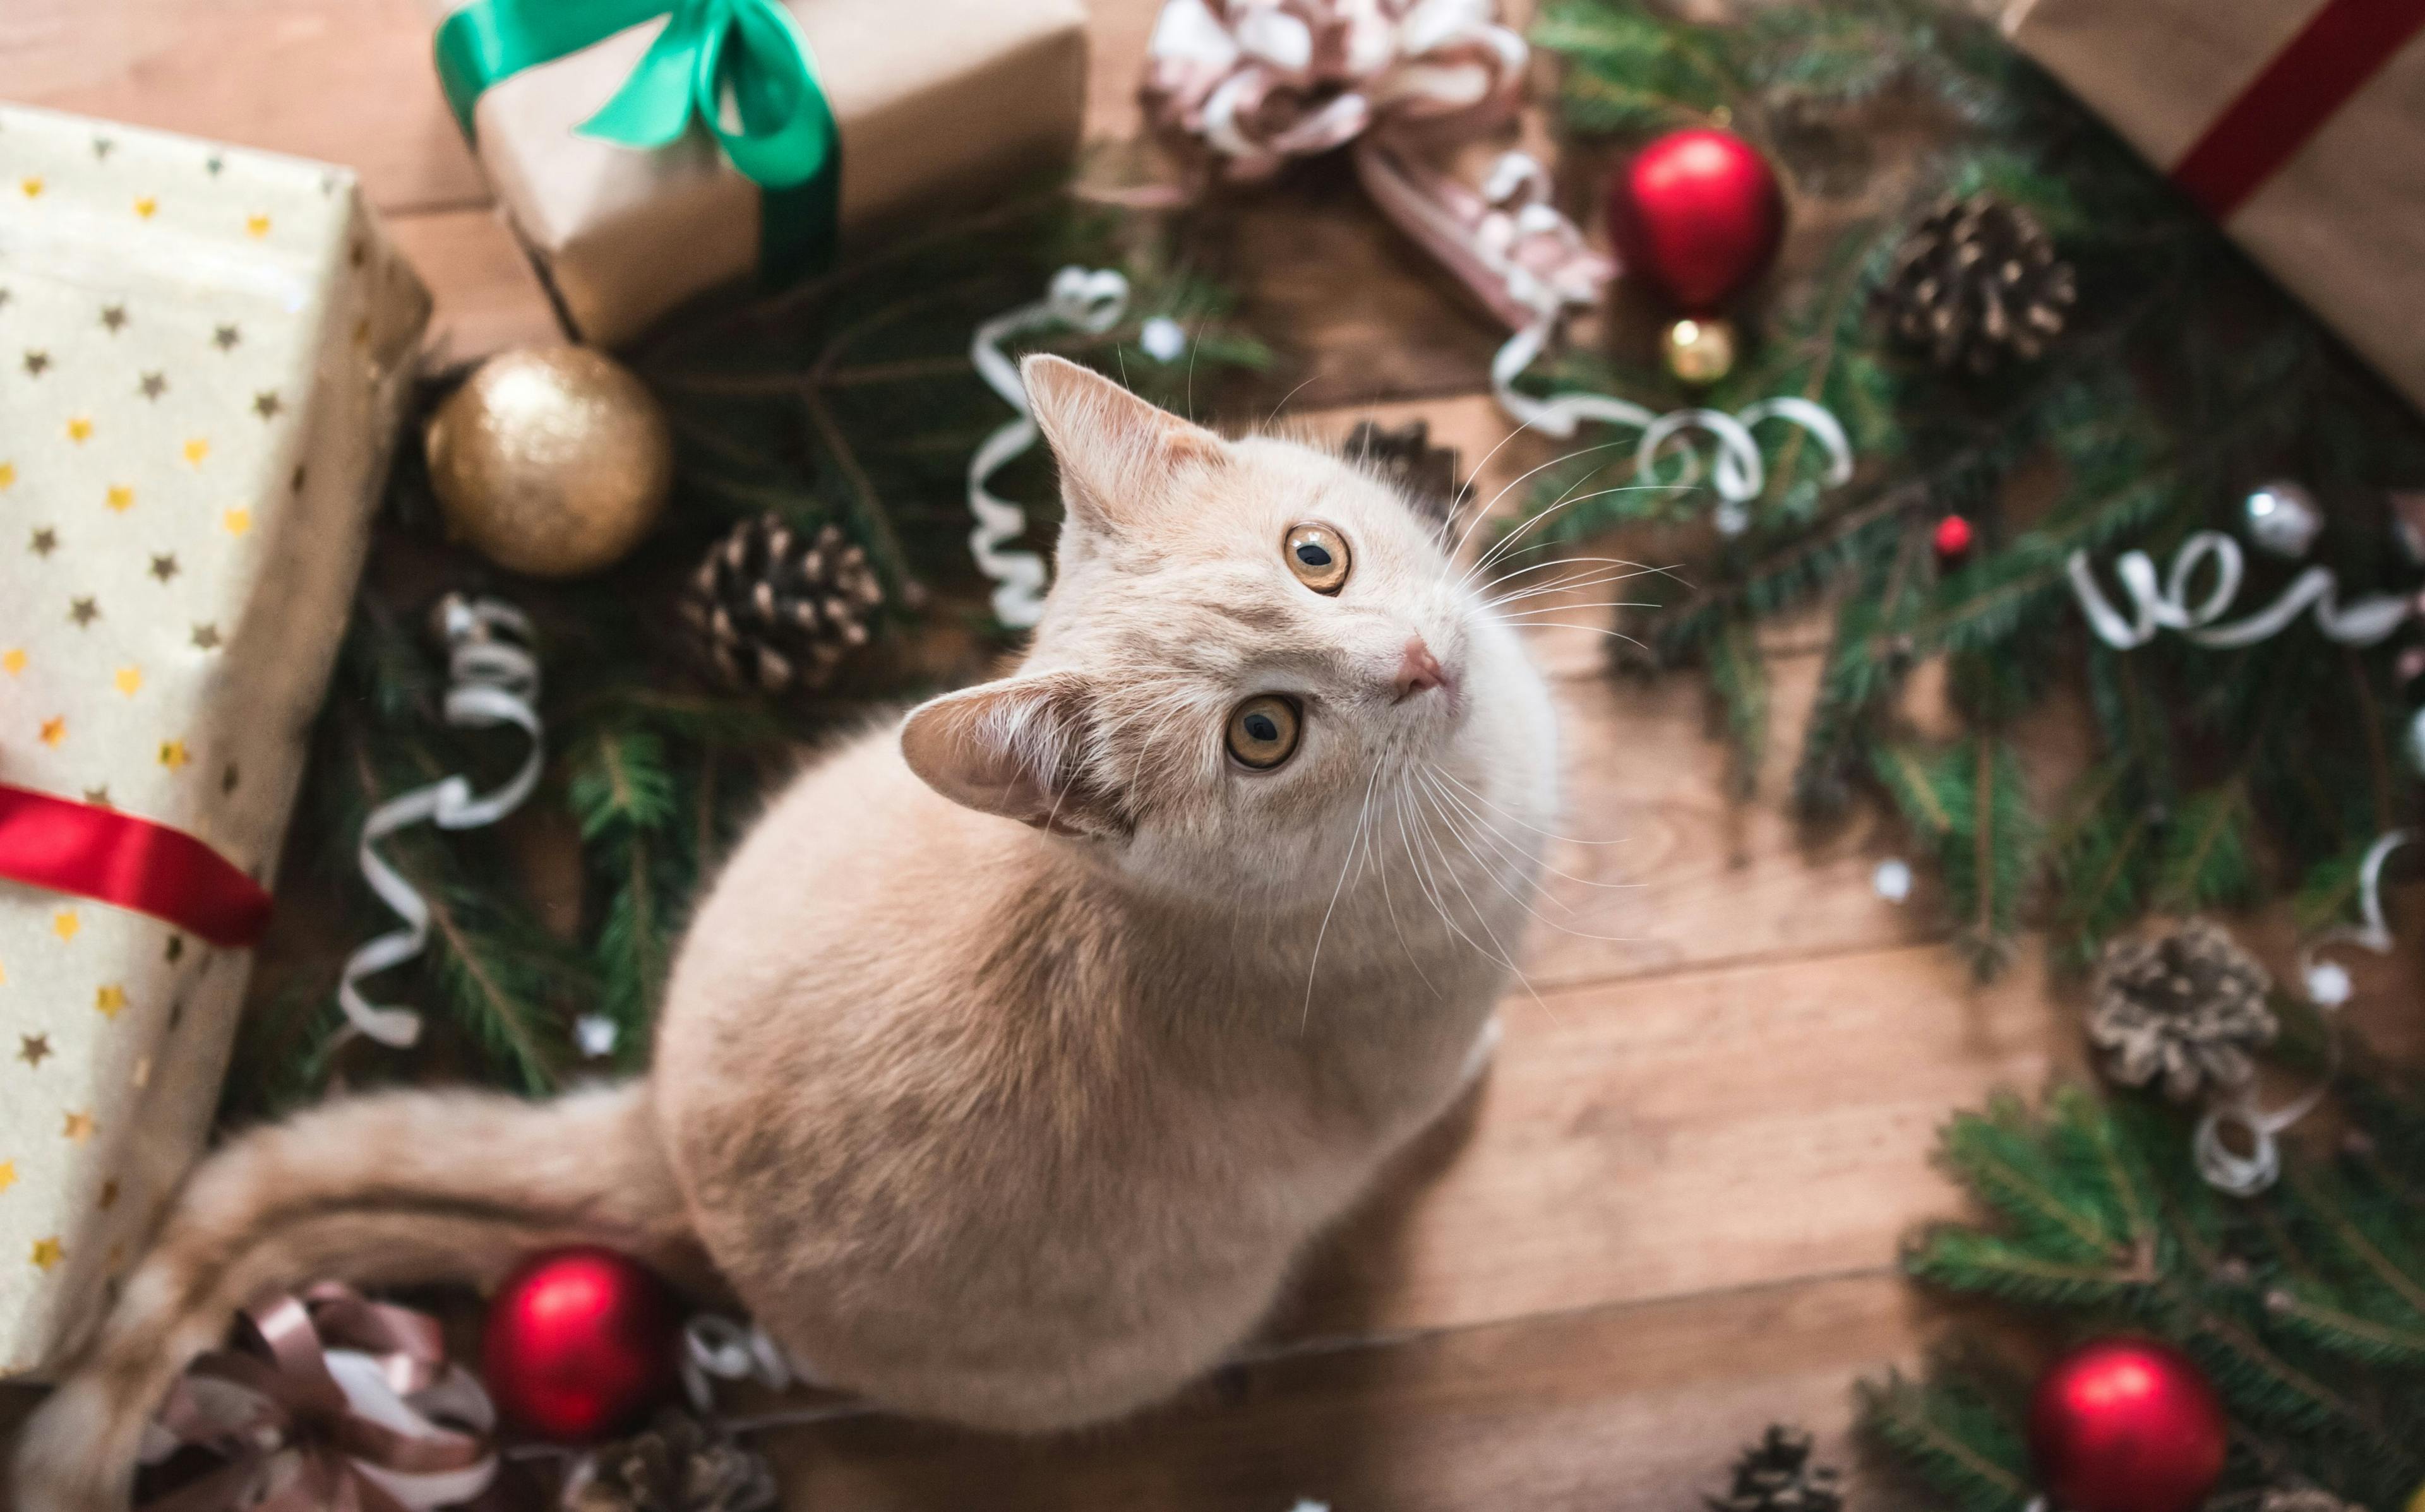 Pet insurance company shares tips for a safe holiday season